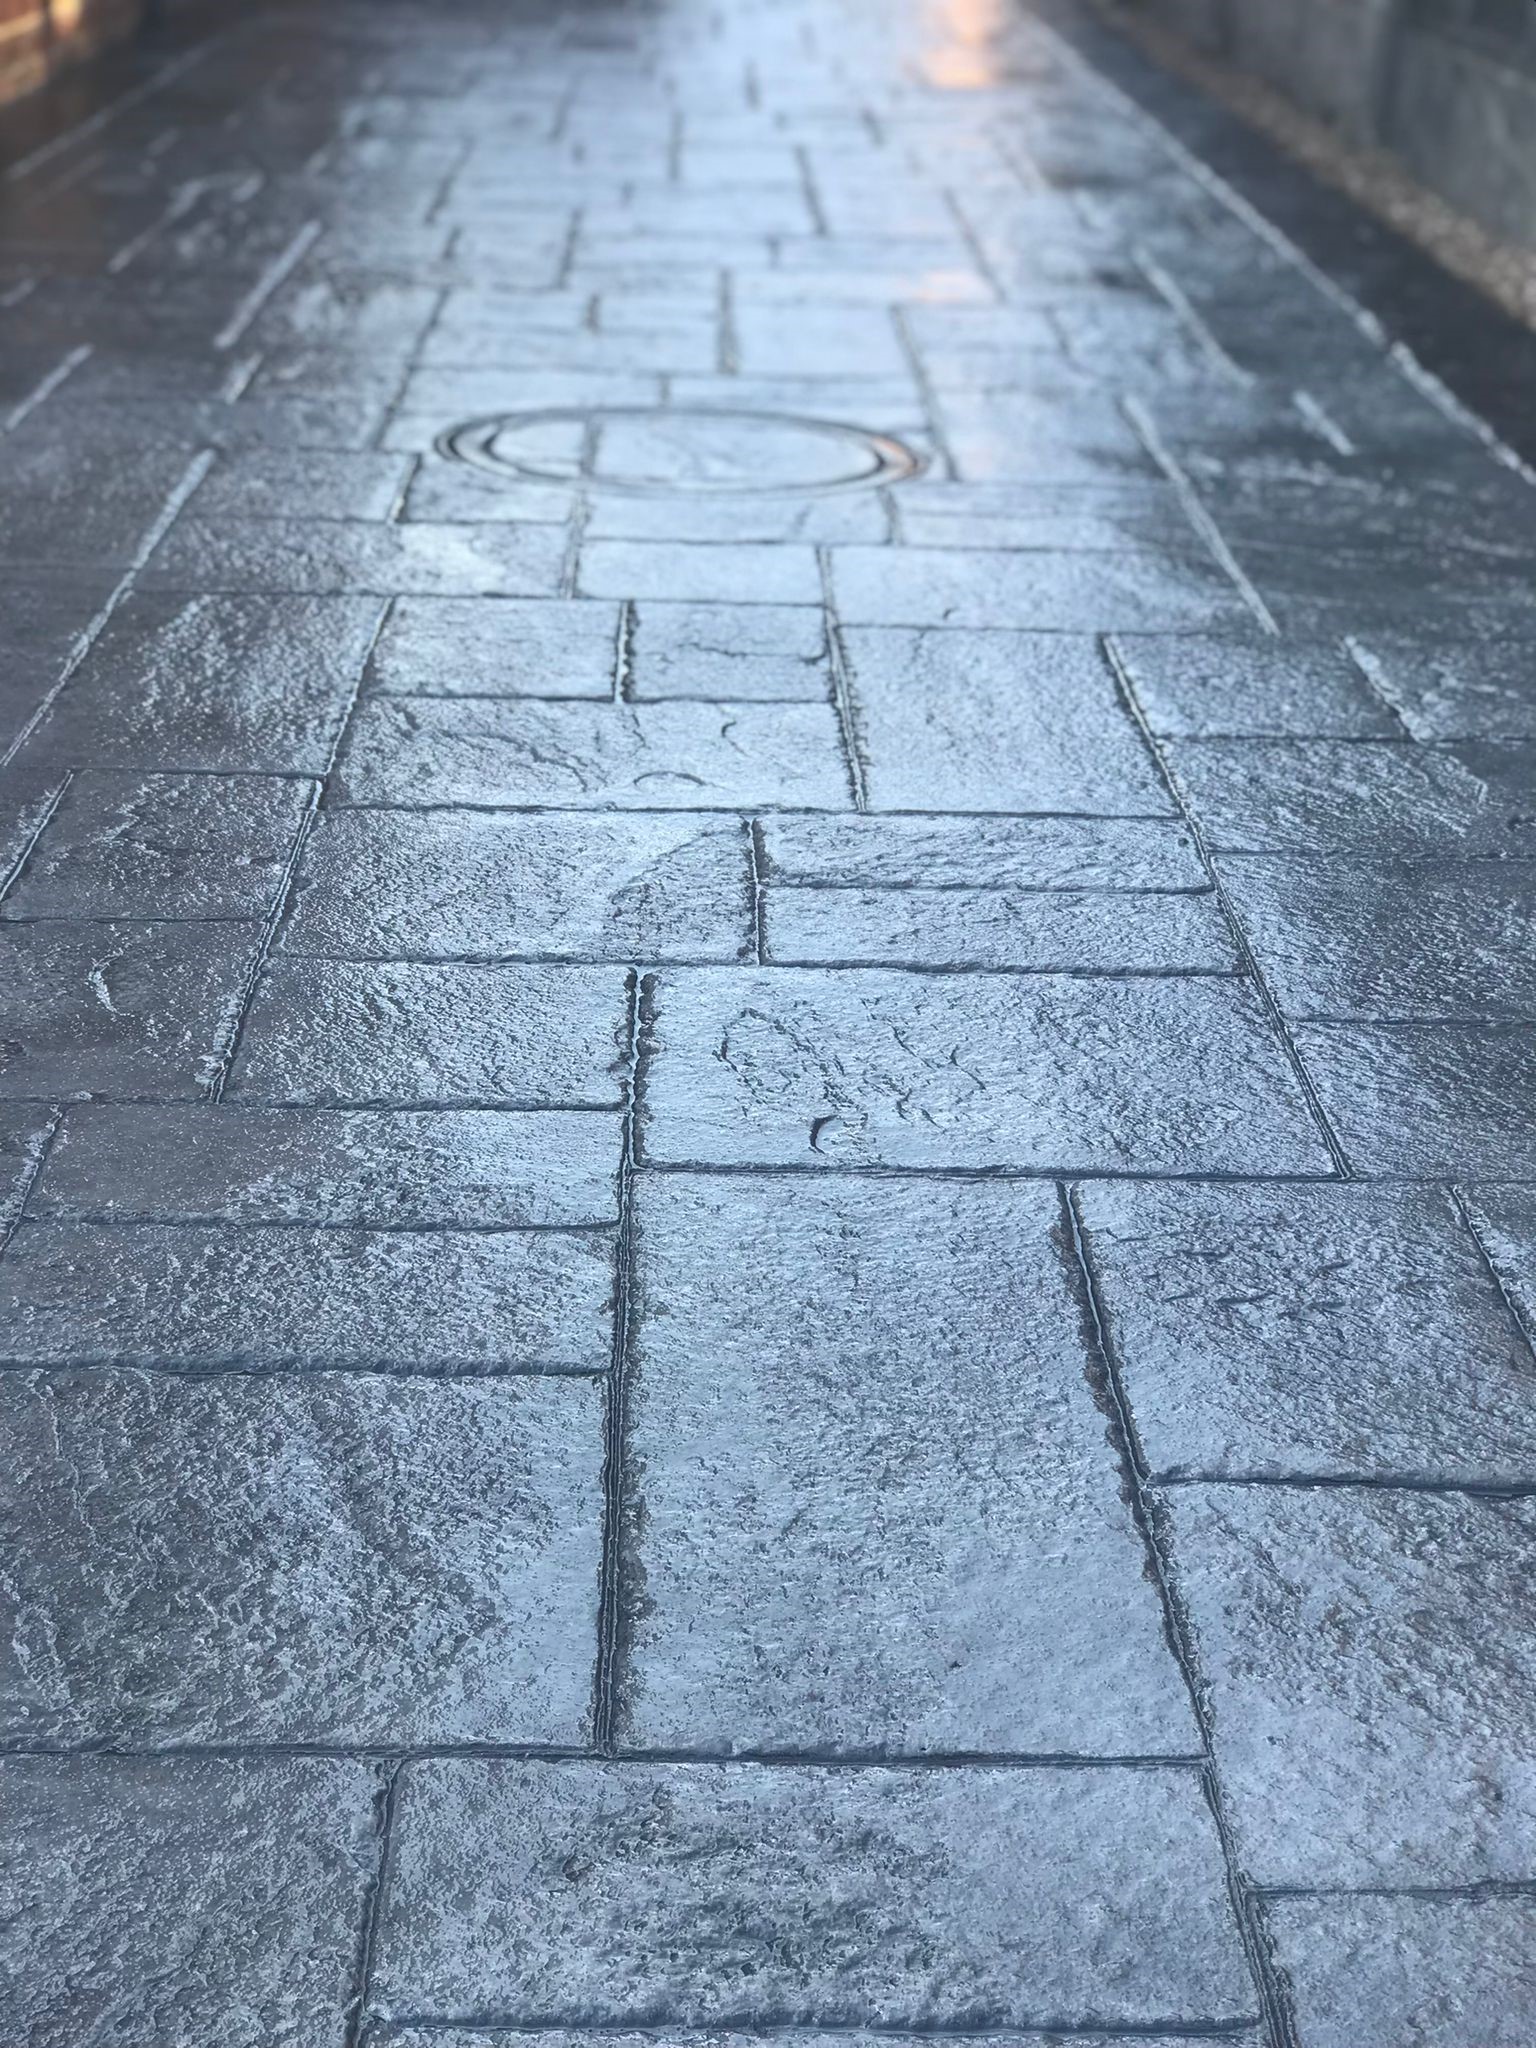 New Driveway in Ashlar Stone Pattern